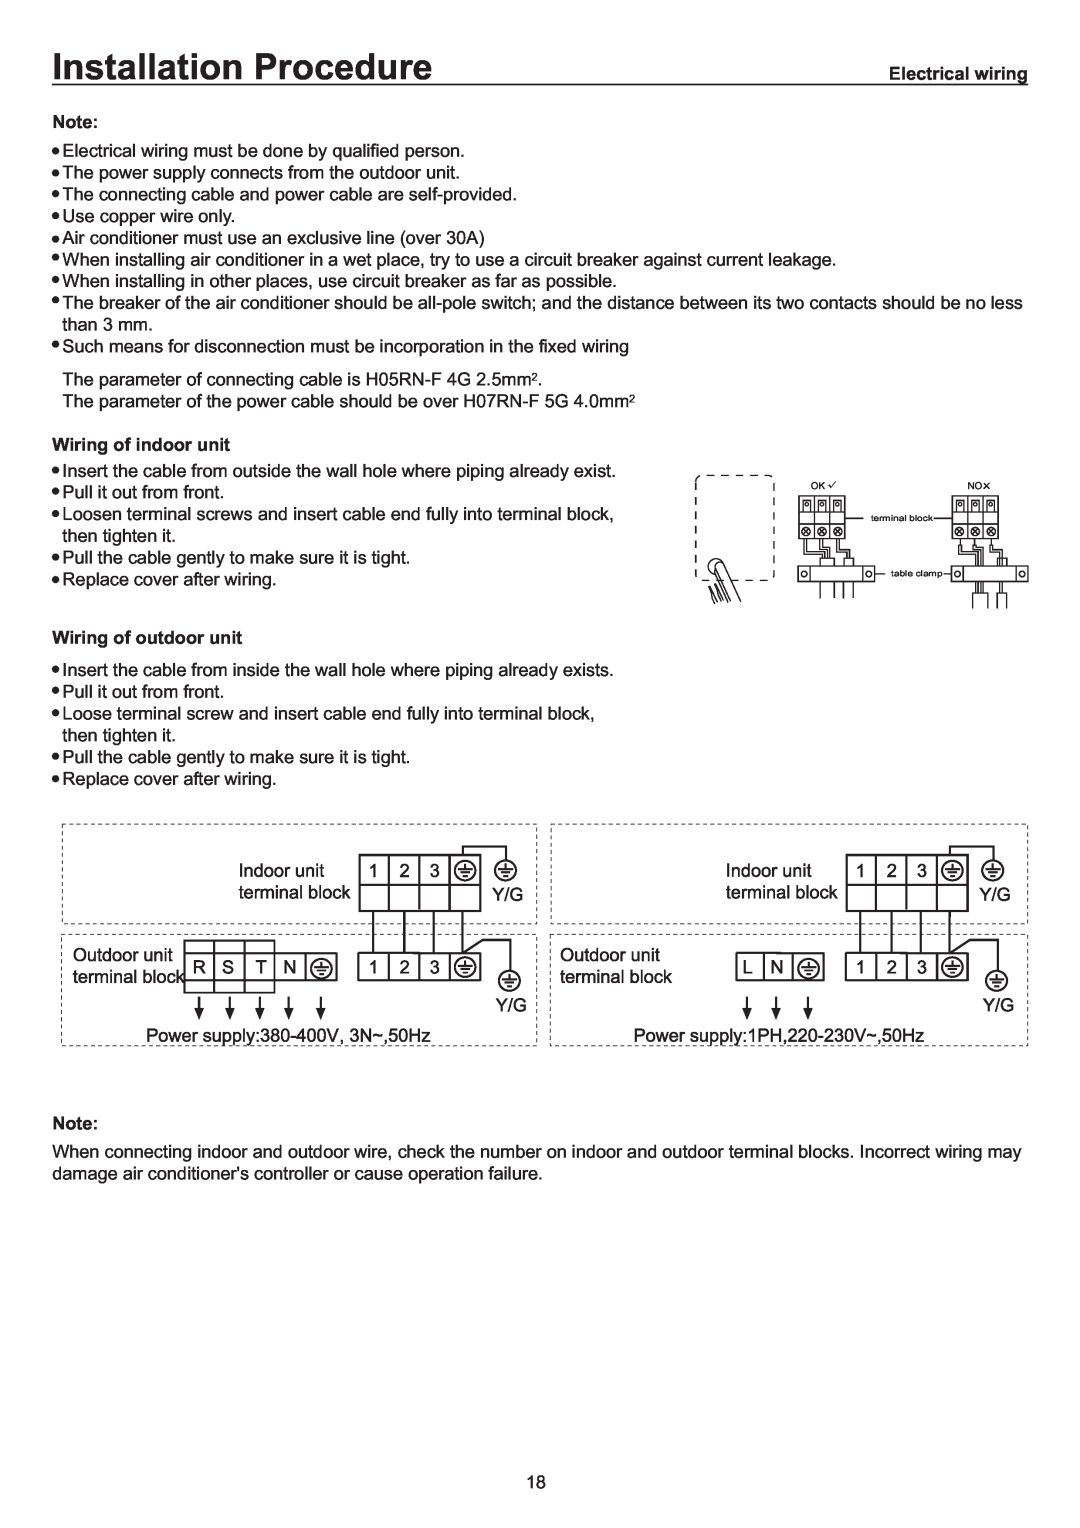 Haier AP60KS1ERA, AP48KS1ERA Electrical wiring, Wiring of indoor unit, Wiring of outdoor unit, Installation Procedure 